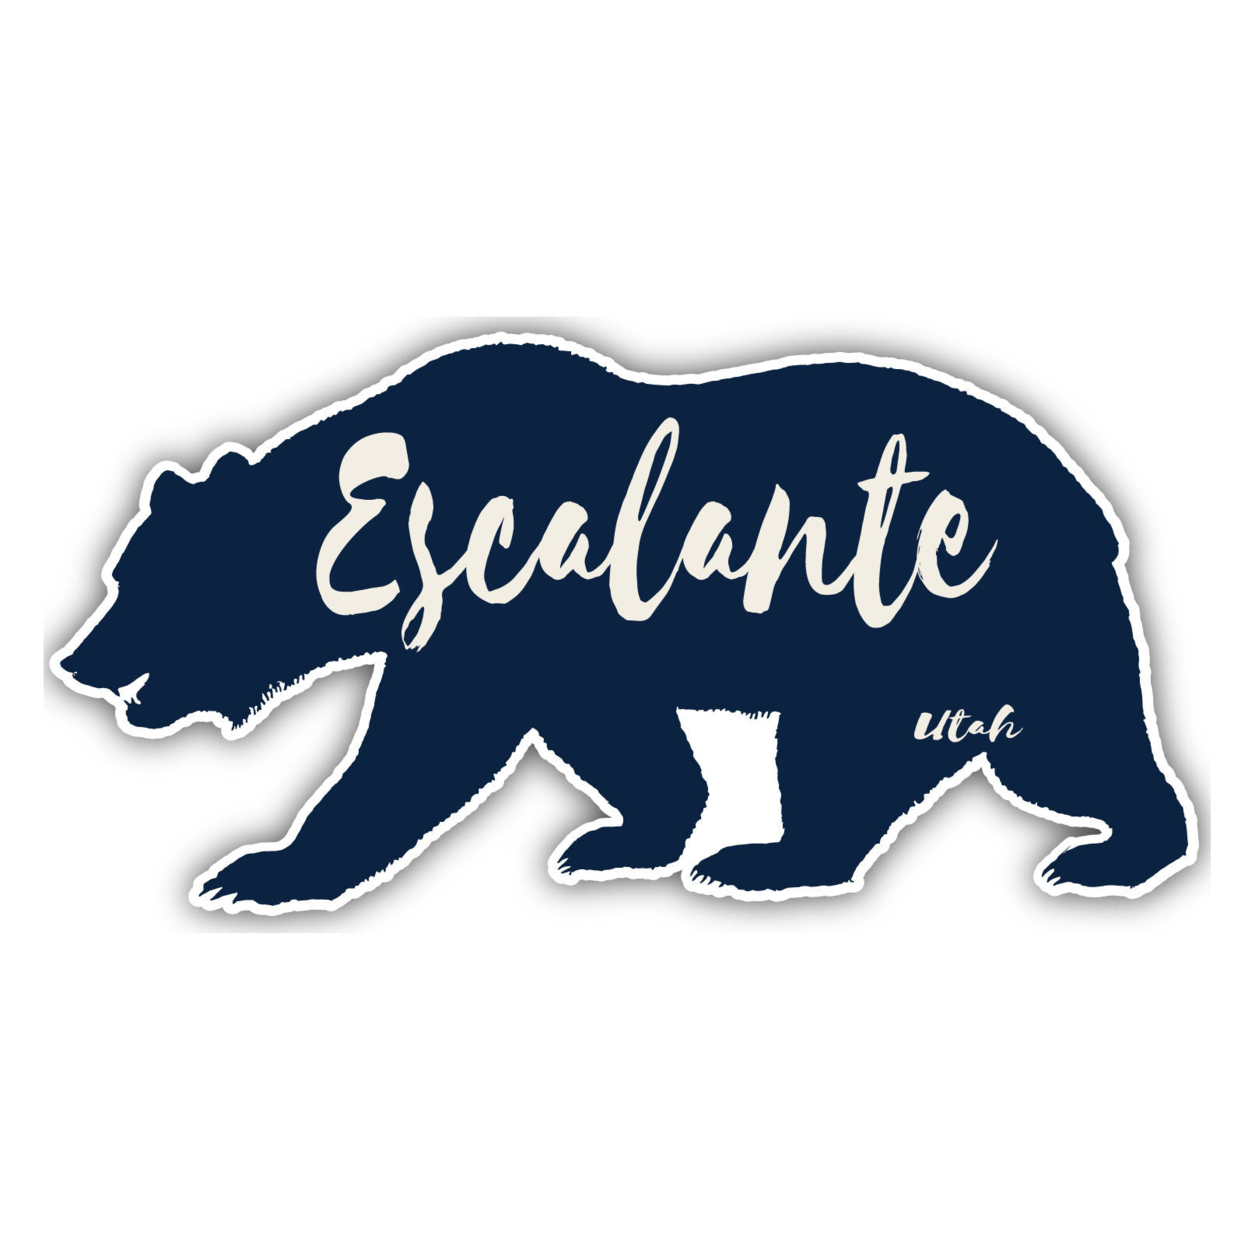 Escalante Utah Souvenir Decorative Stickers (Choose Theme And Size) - 4-Pack, 10-Inch, Bear